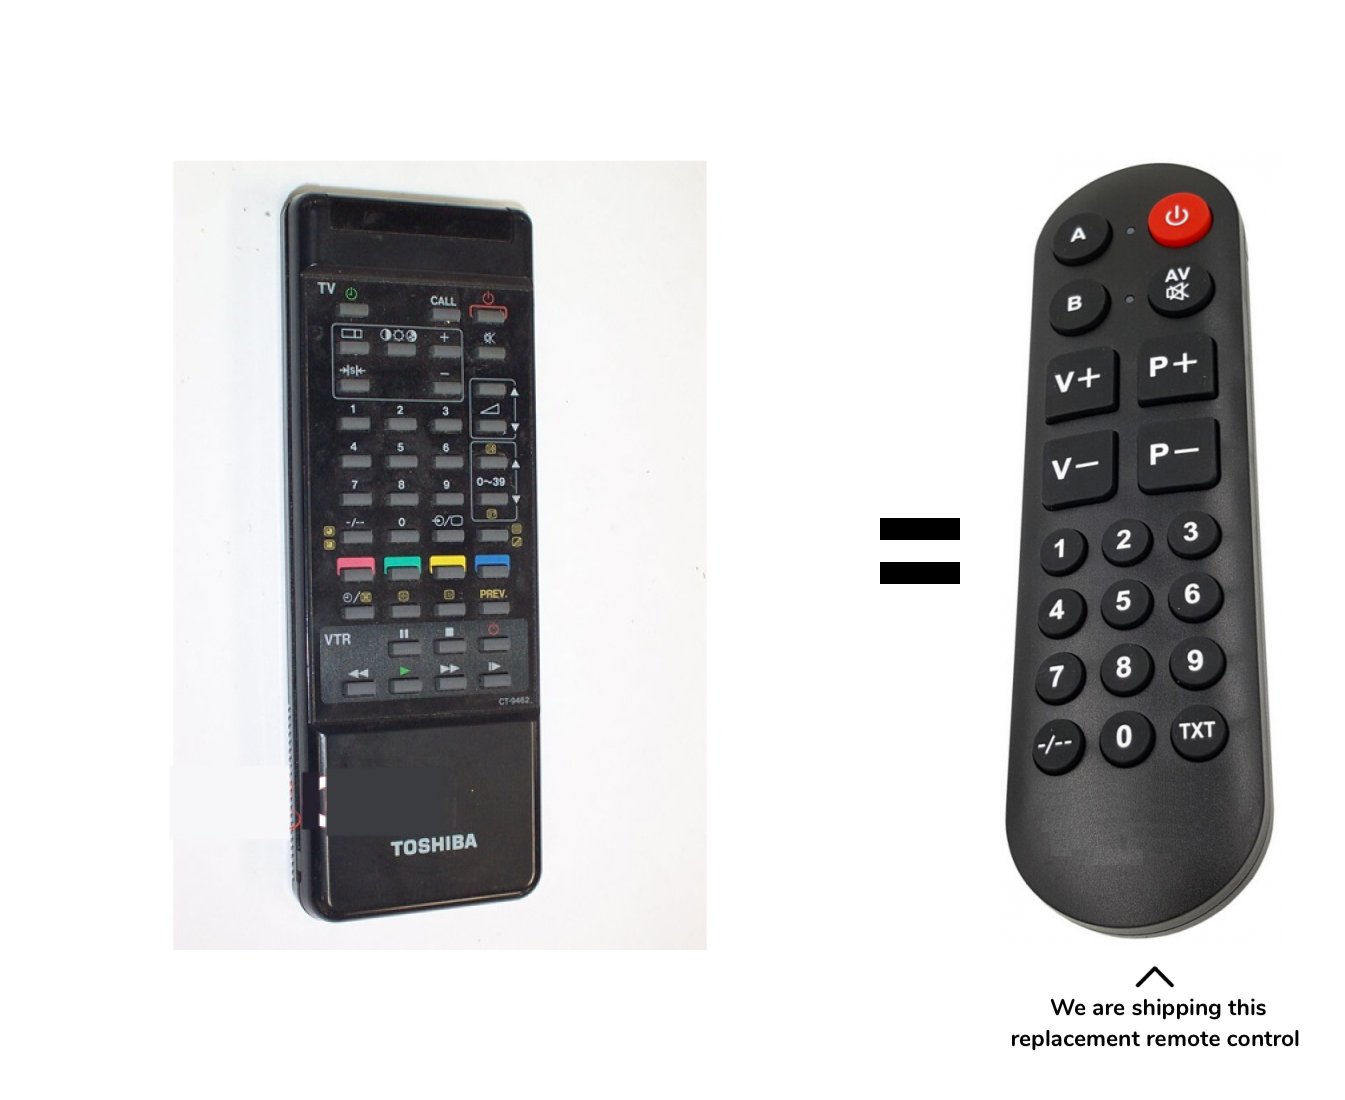 Toshiba 1720TT–17 remote control for seniors